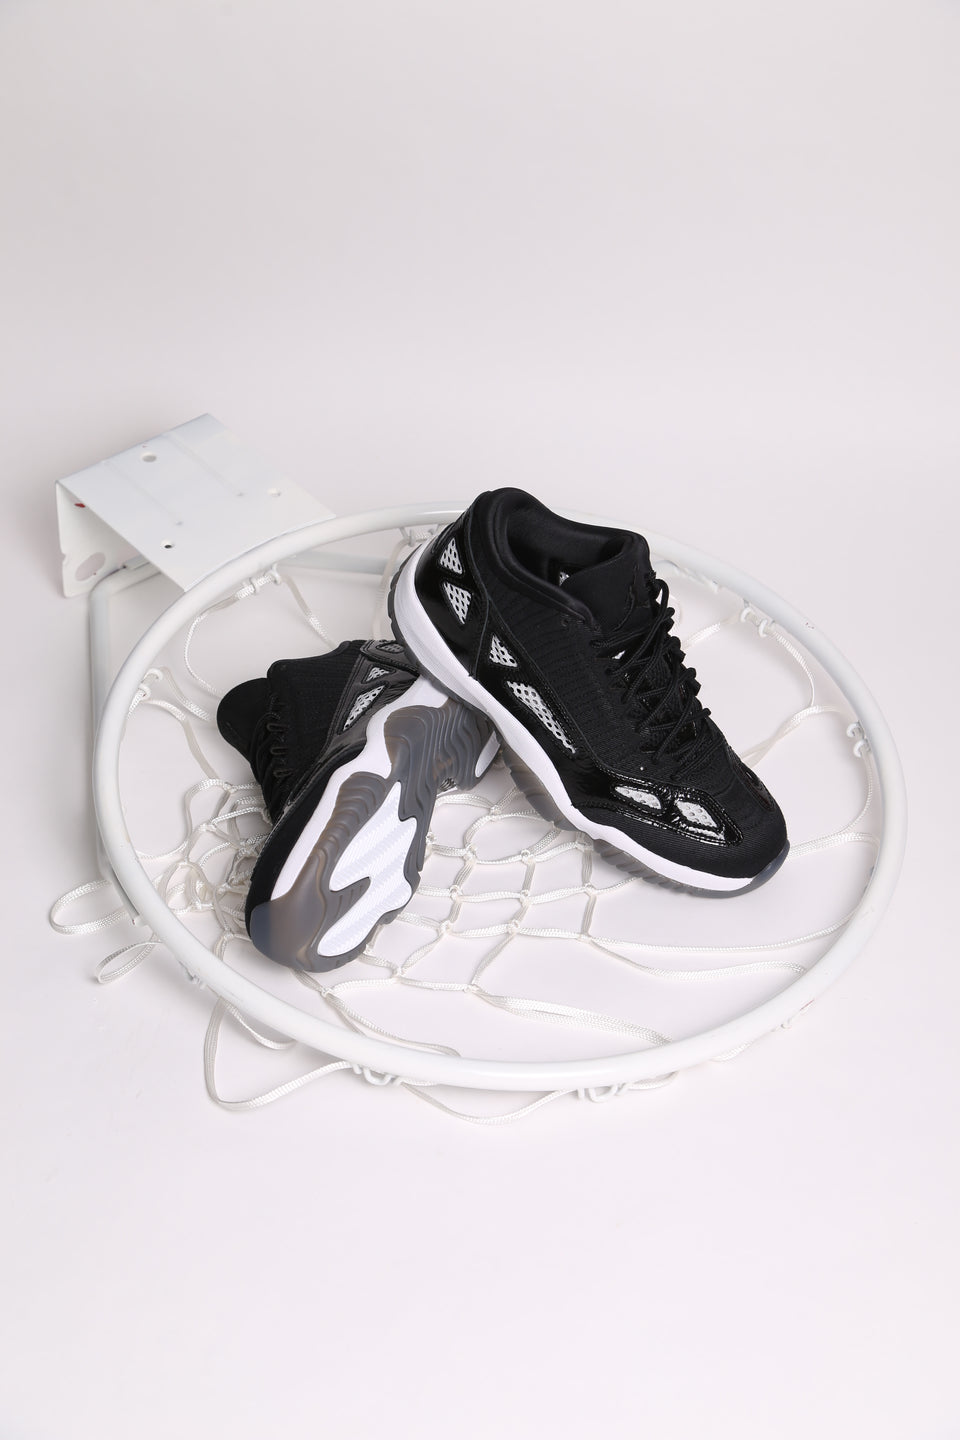 Air Jordan 11 IE Low - Black & White